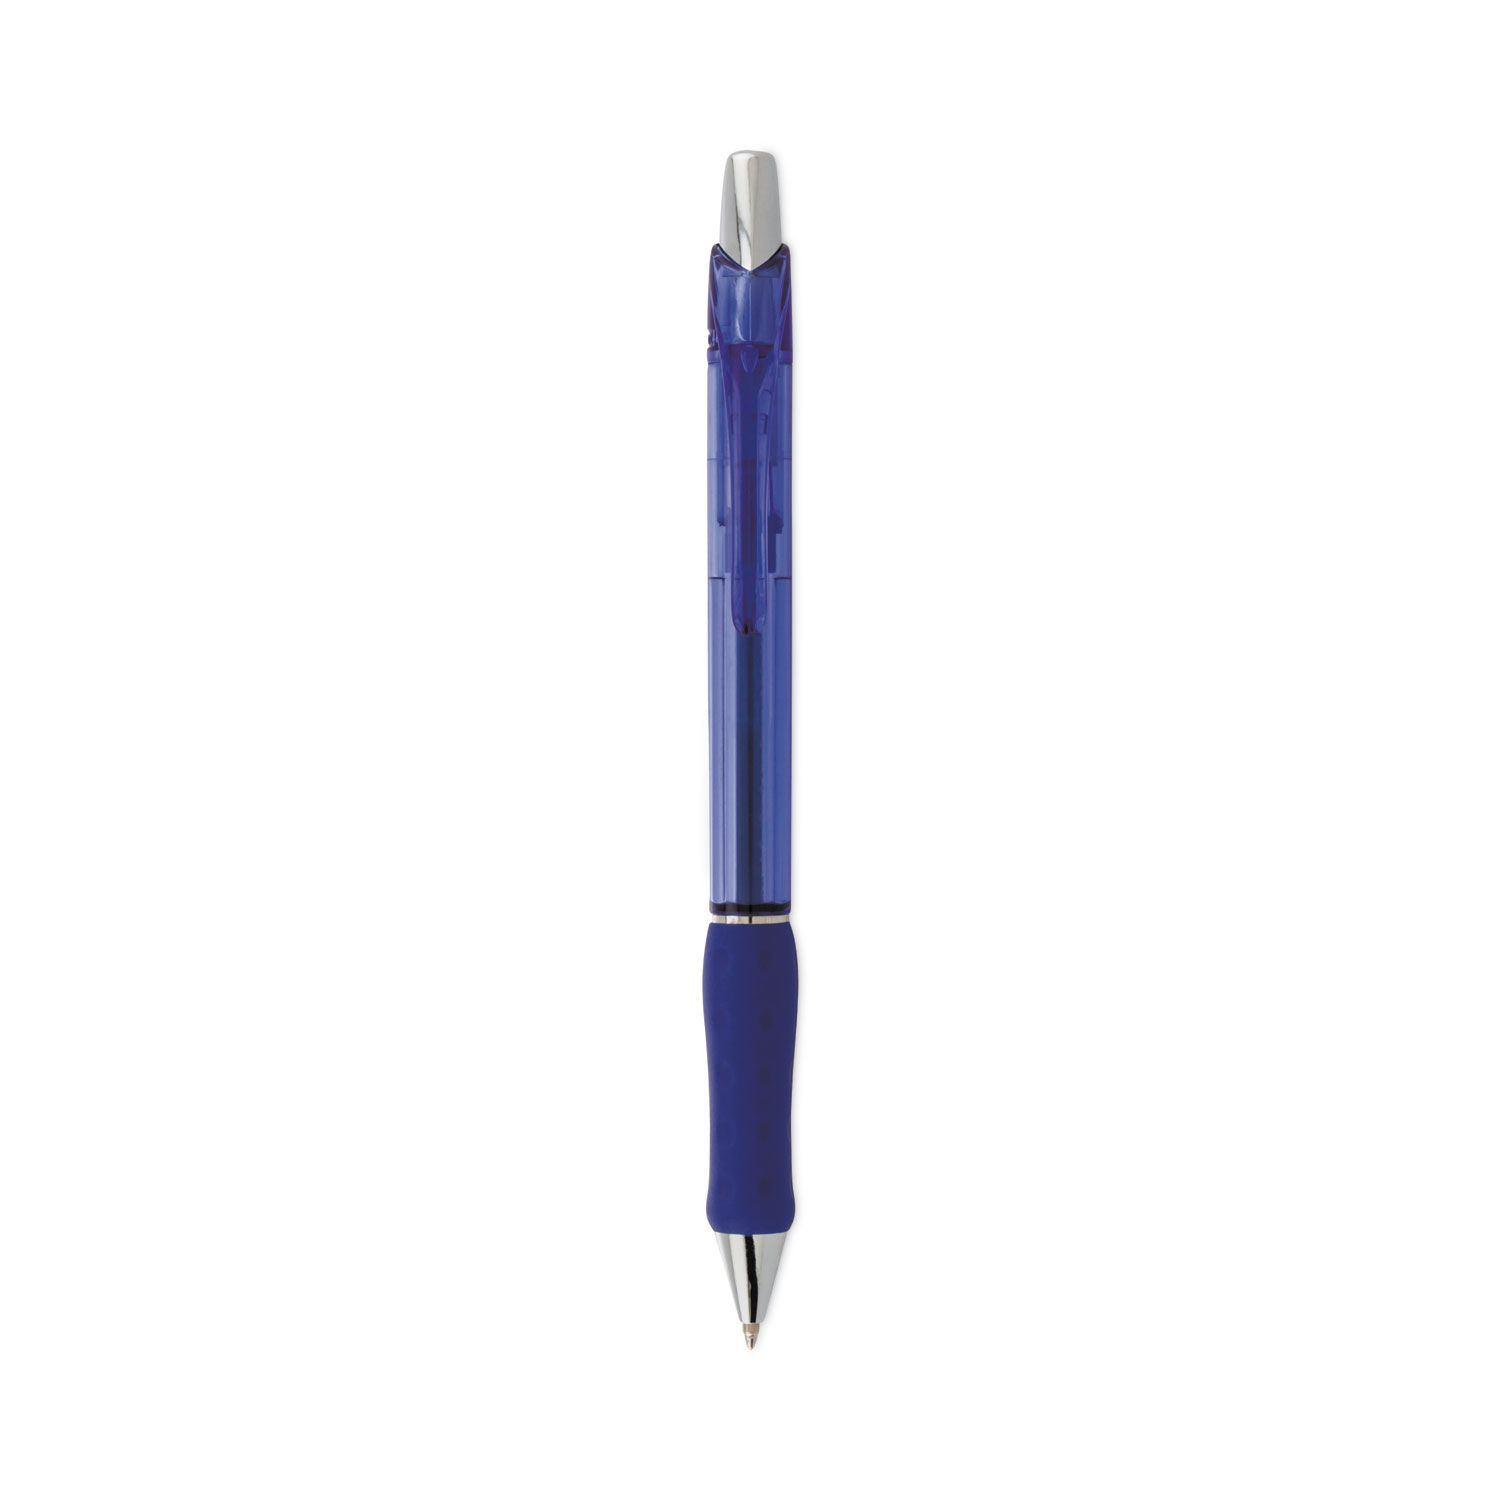 Pentel R.S.V.P. Super RT Retractable Ballpoint Pen, Blue - PENBX480C, Pentel Of America